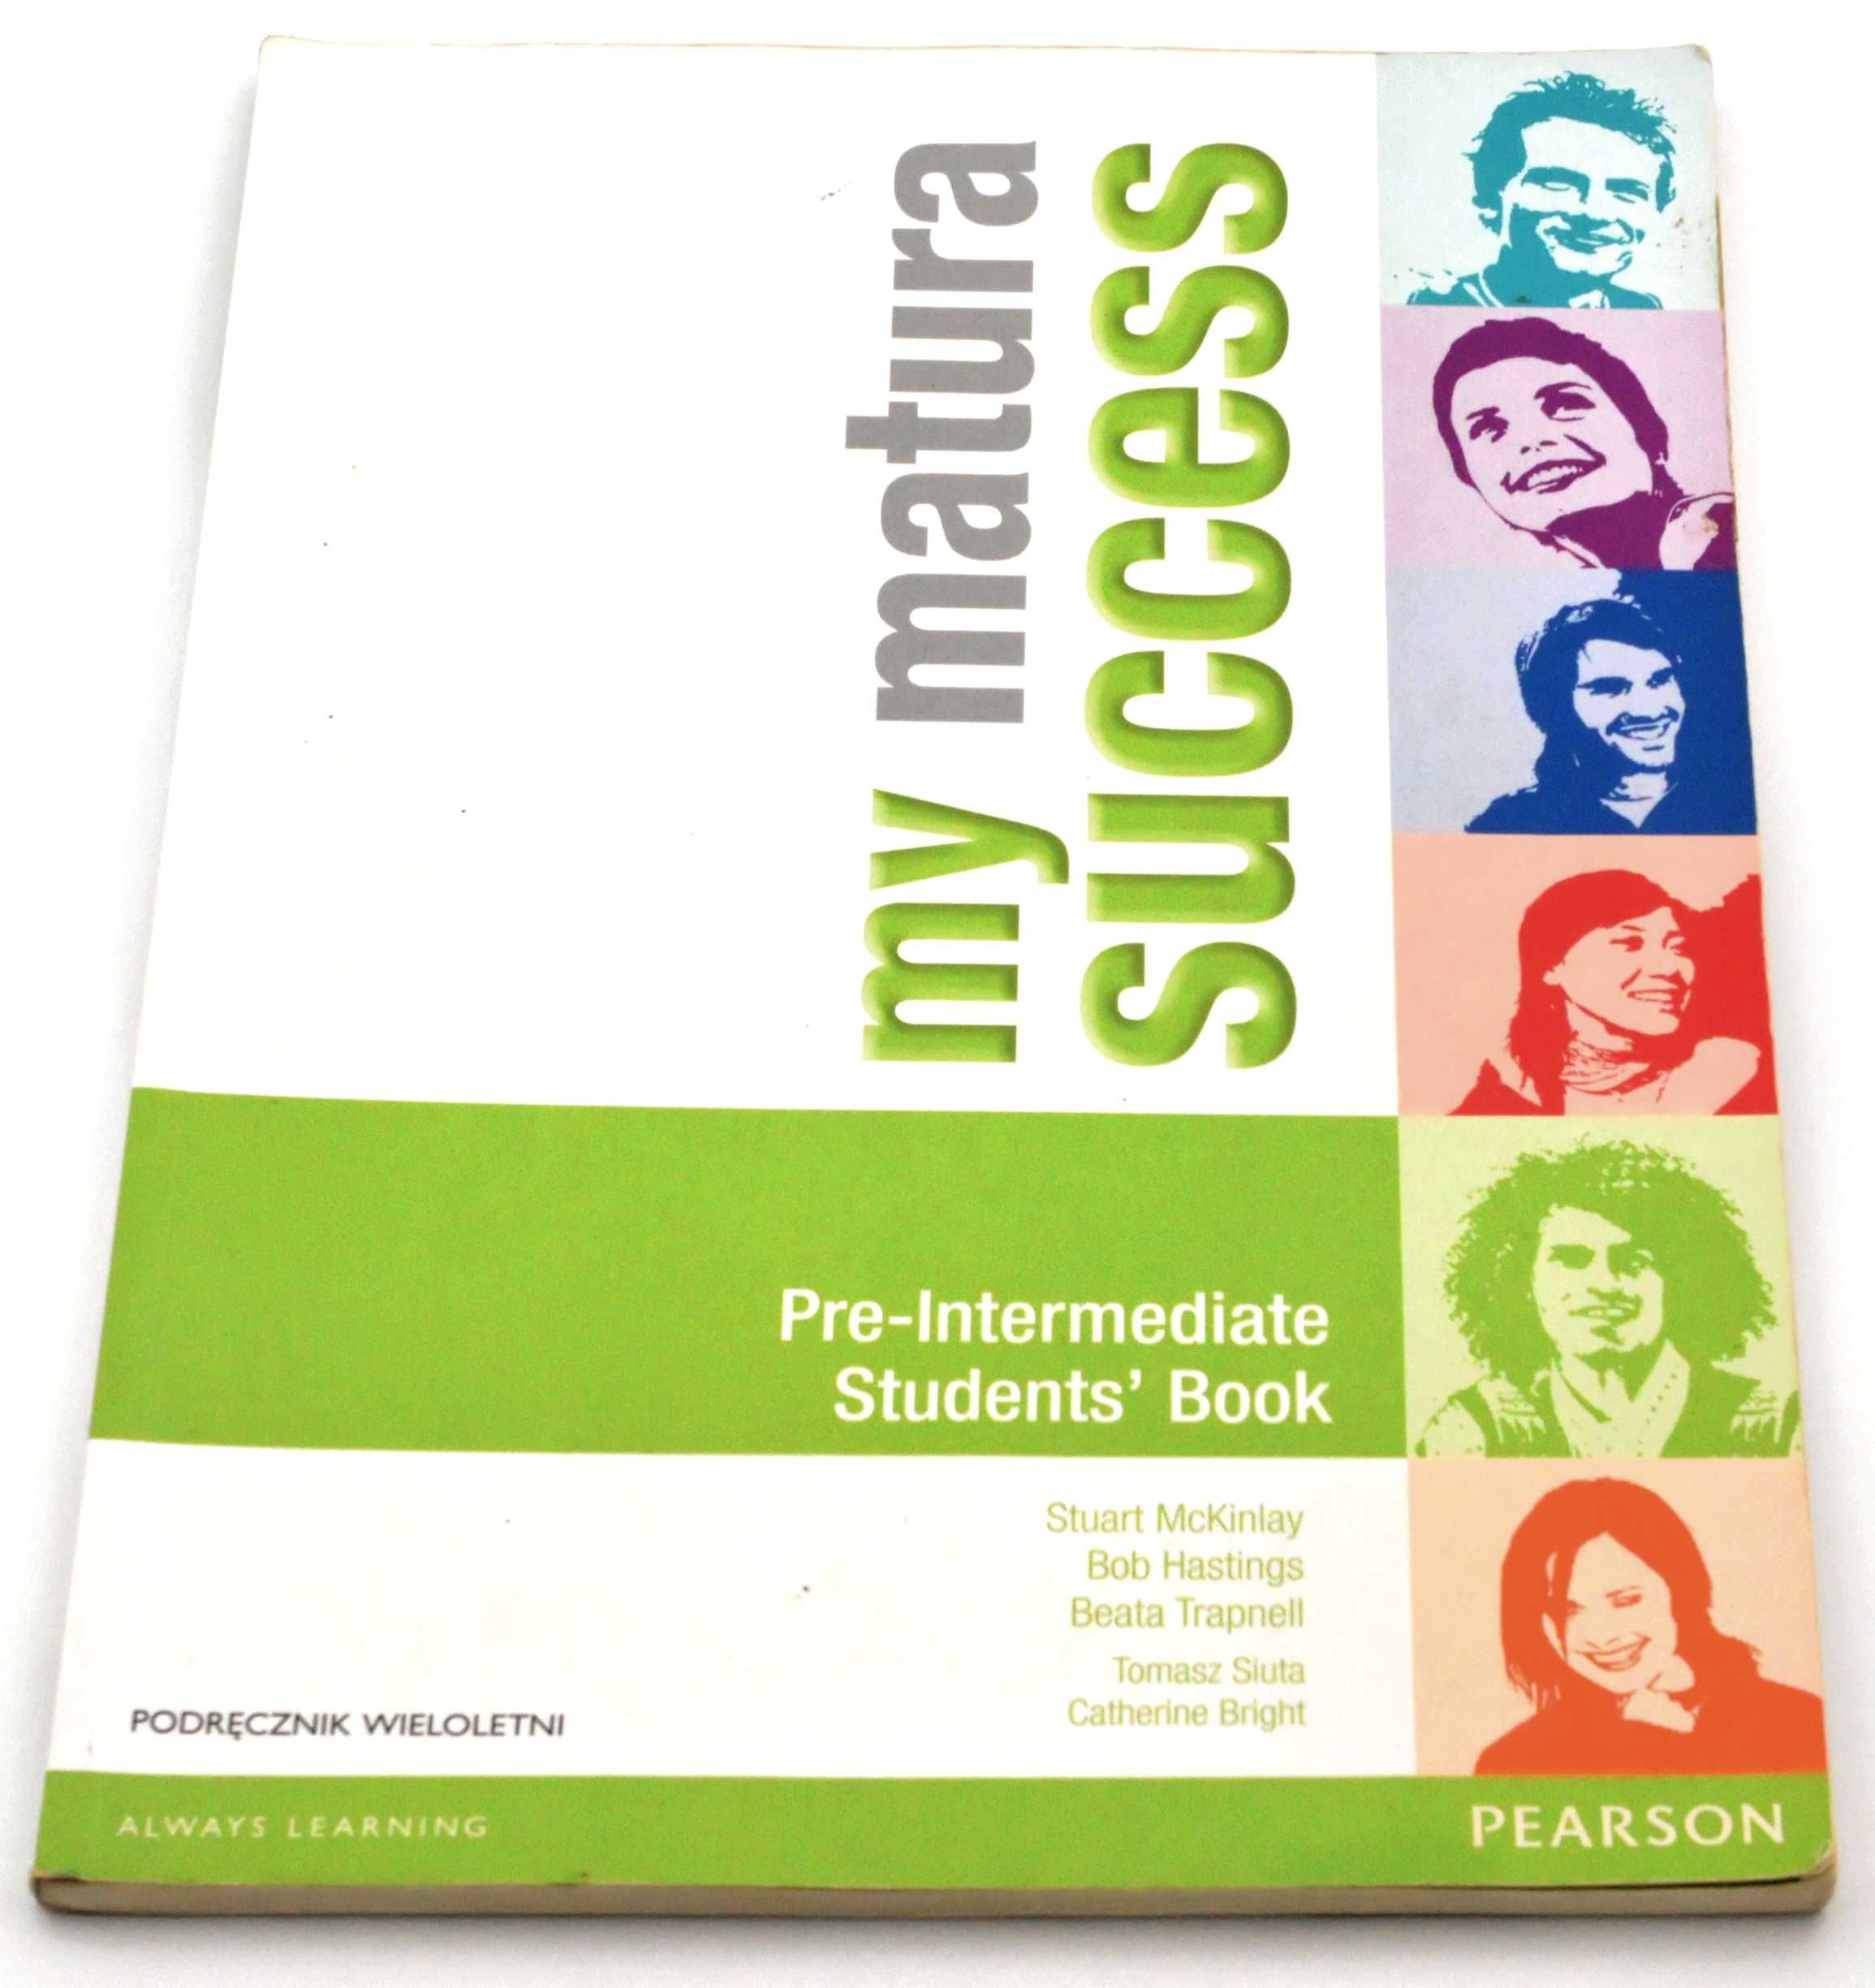 My Matura Success Pre-Intermediate Podręcznik wieloletni